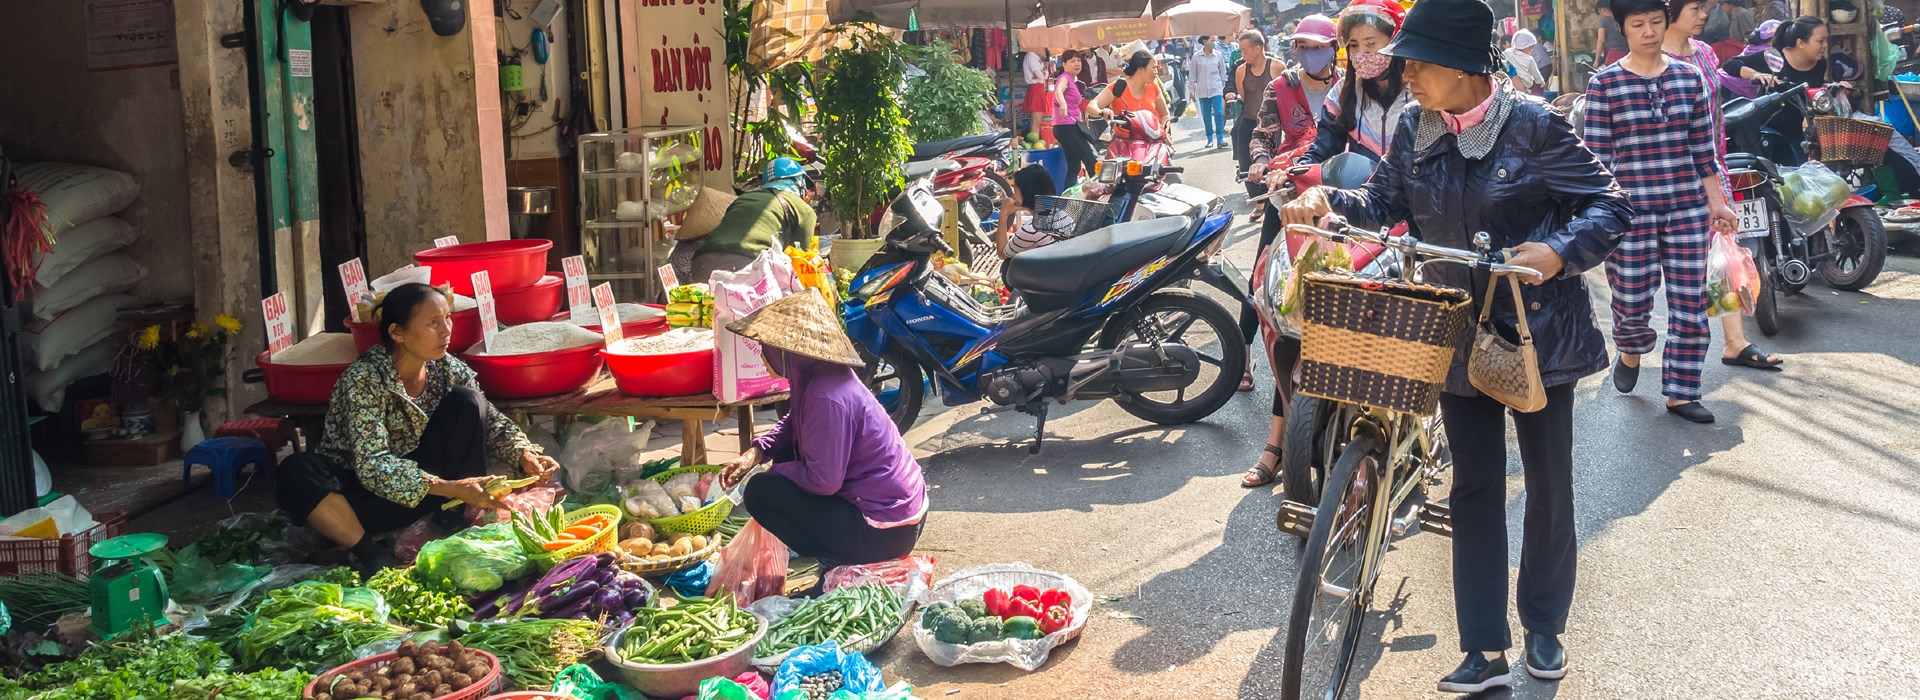 Visiter Hanoi - Vietnam